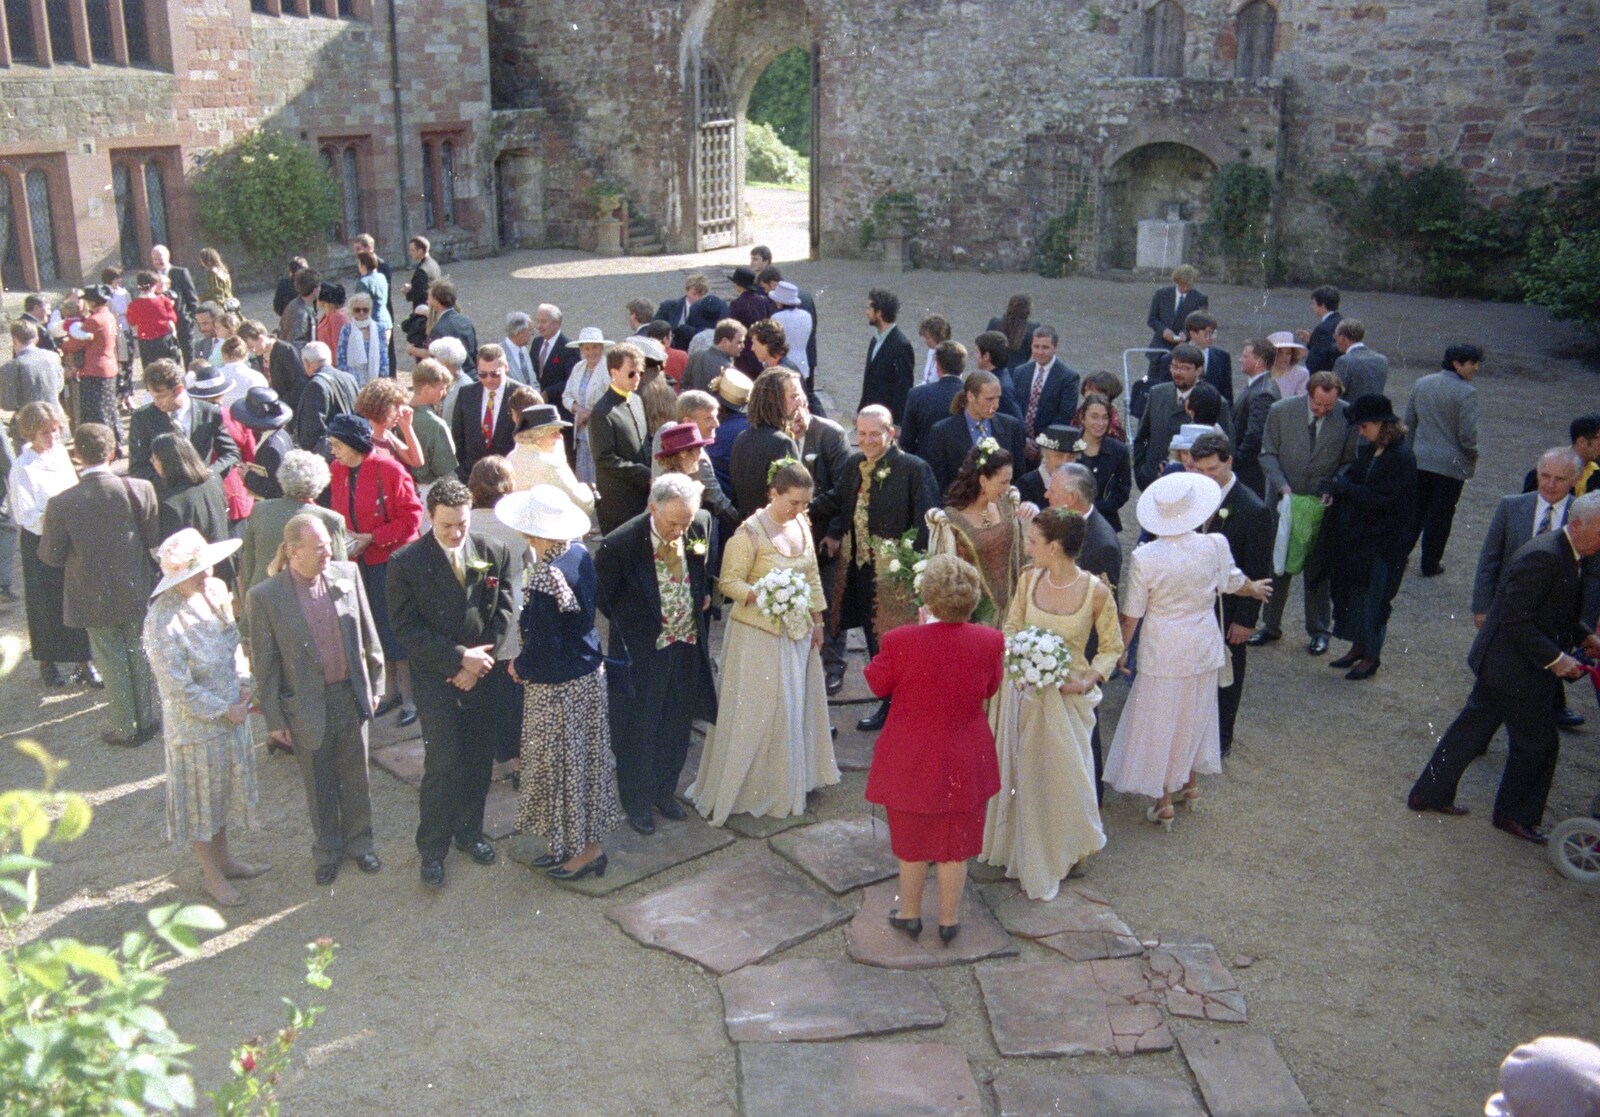 Stuart and Sarah's CISU Wedding, Naworth Castle, Brampton, Cumbria - 21st September 1996: A view of the courtyard